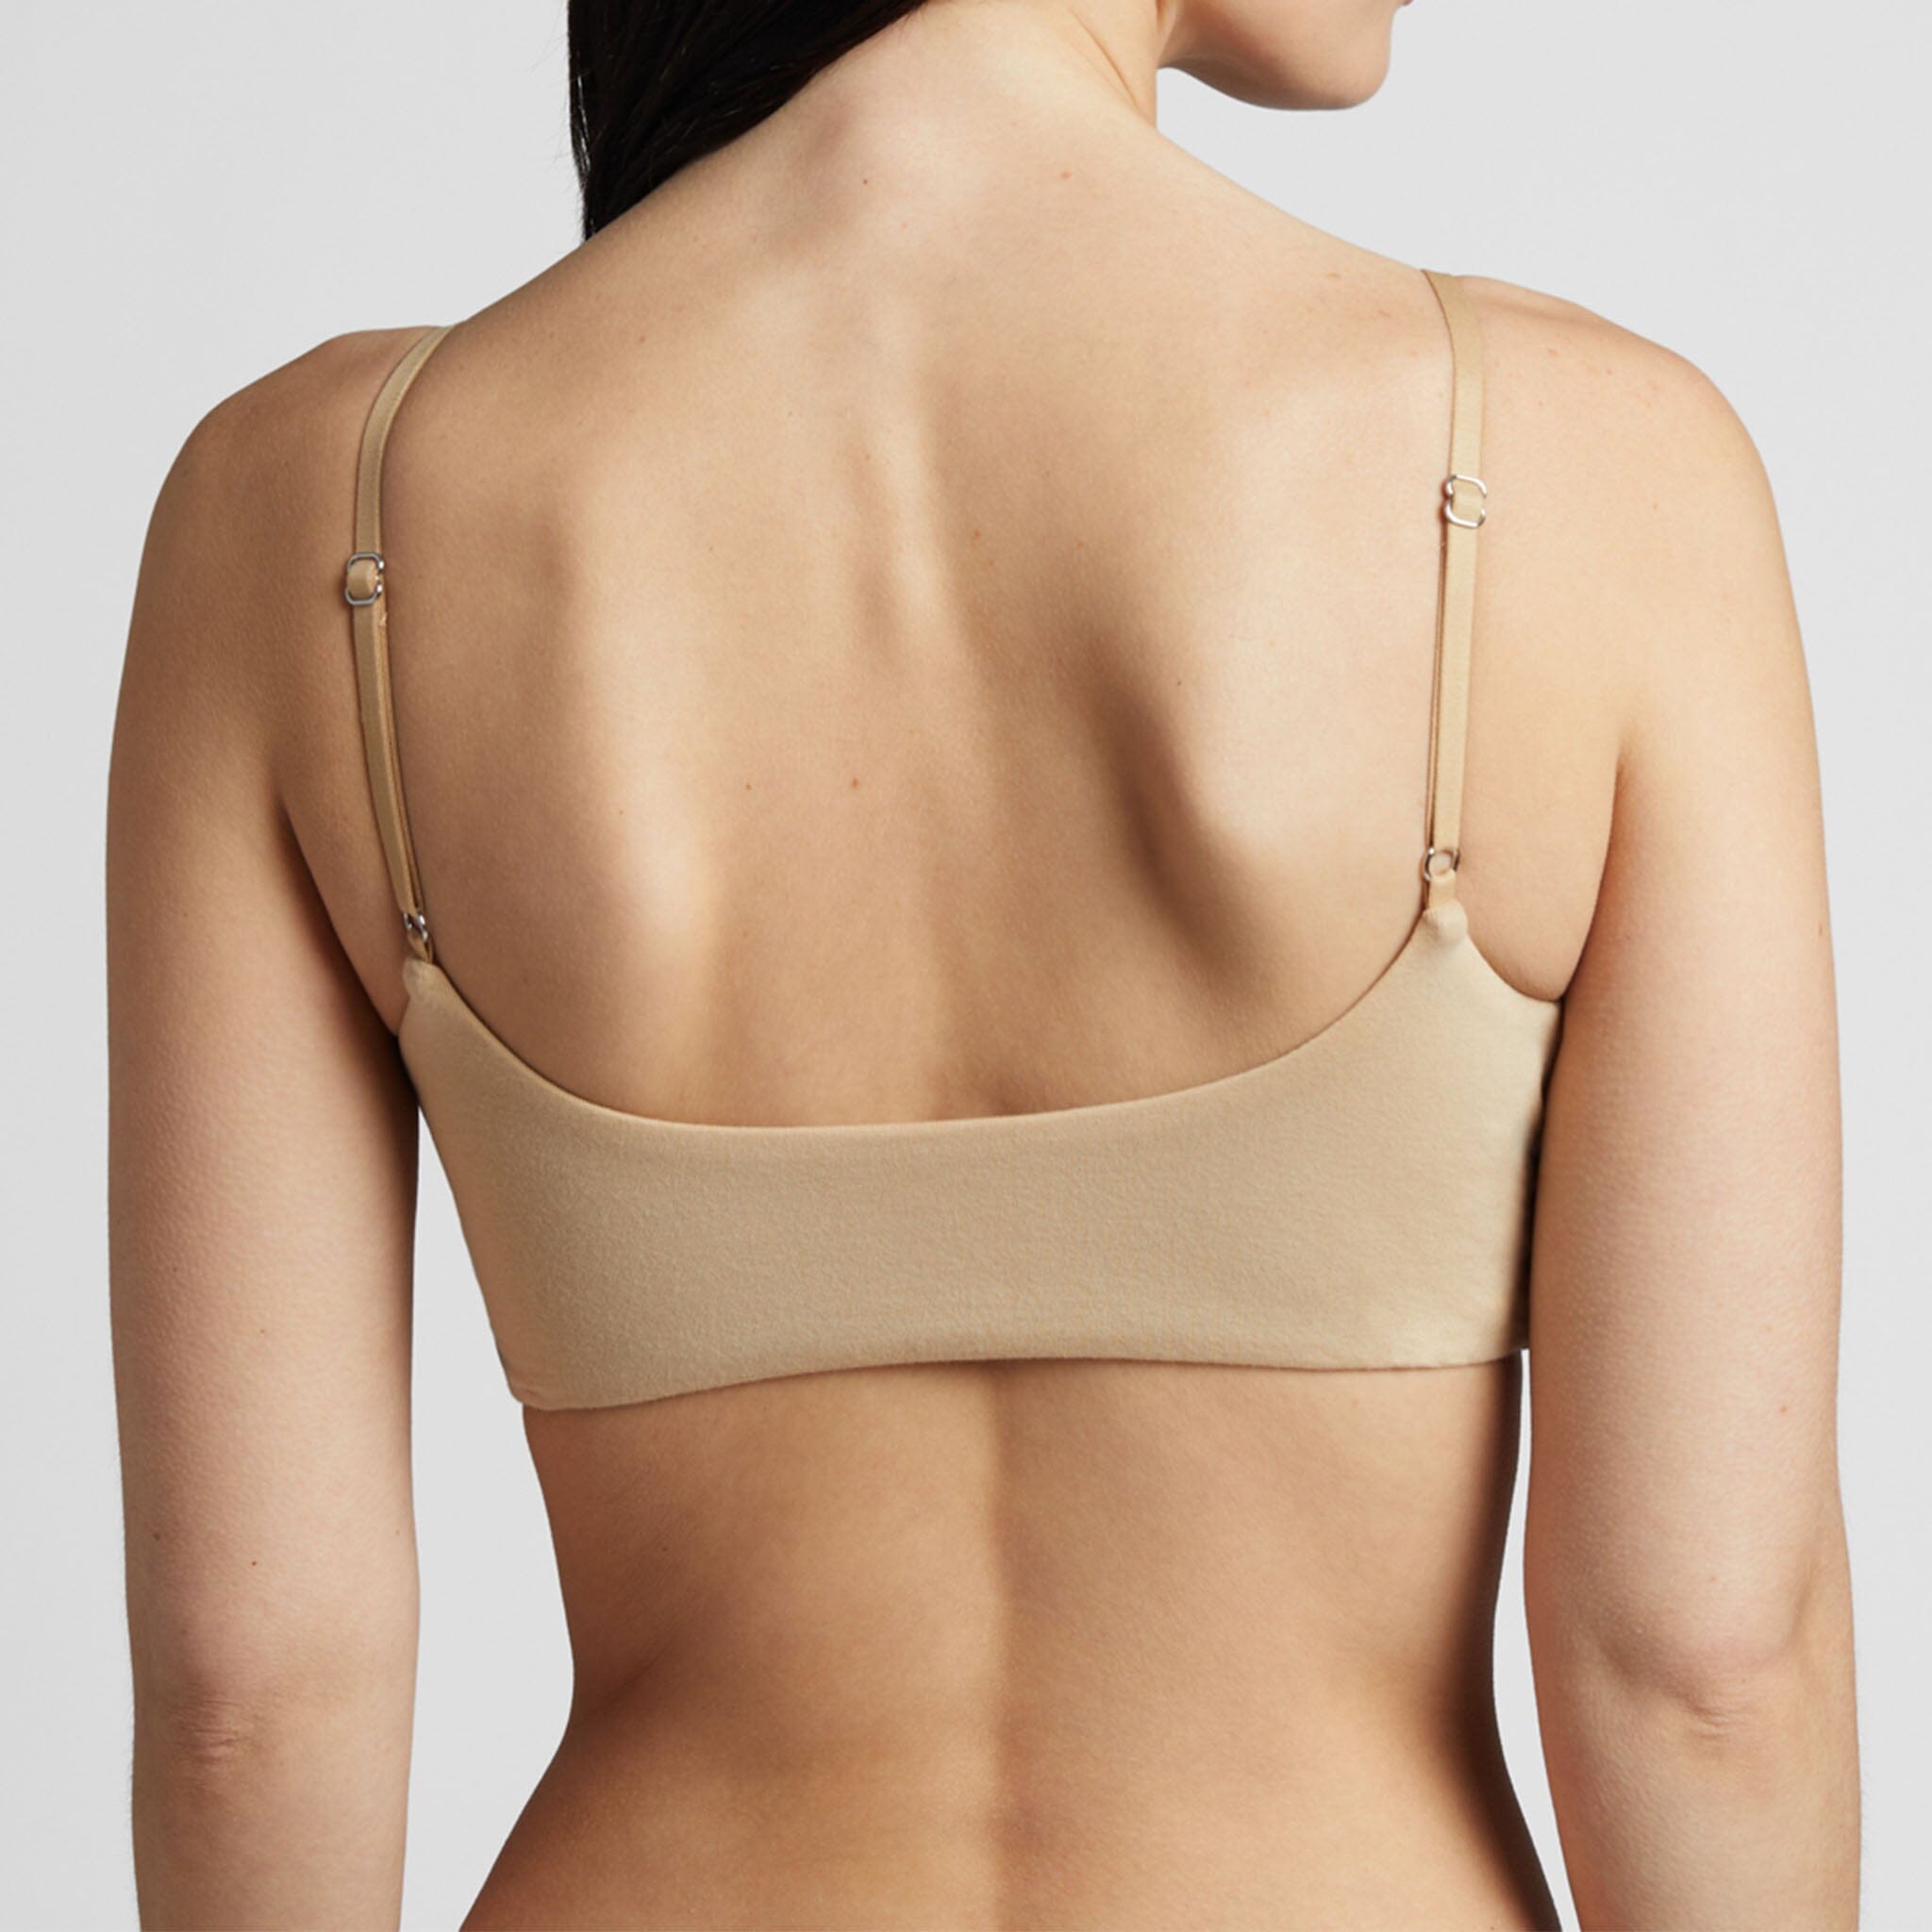 Slick Chicks™ Velcro Front Fastening Bra  Front fastening bras, Comfortable  bras, Front closure bra